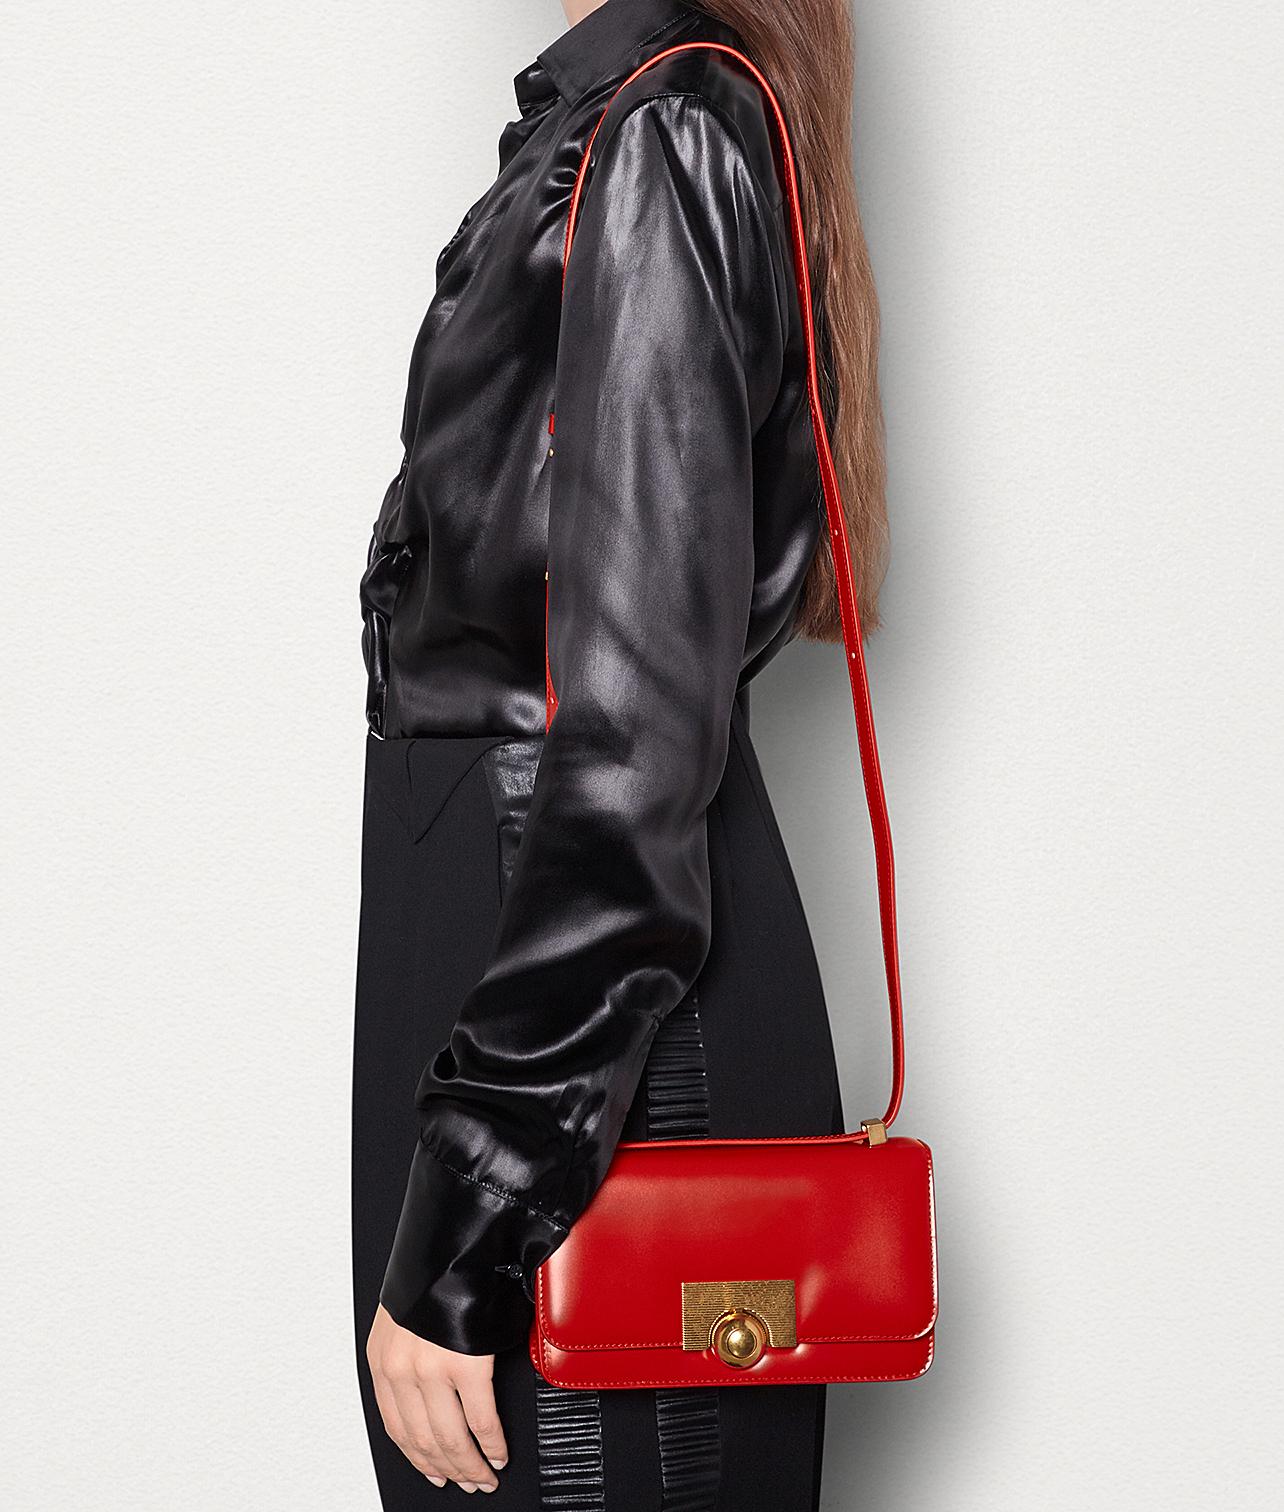 Bottega Veneta Leather The Mini Classic Bag in Bright Red (Red) - Lyst